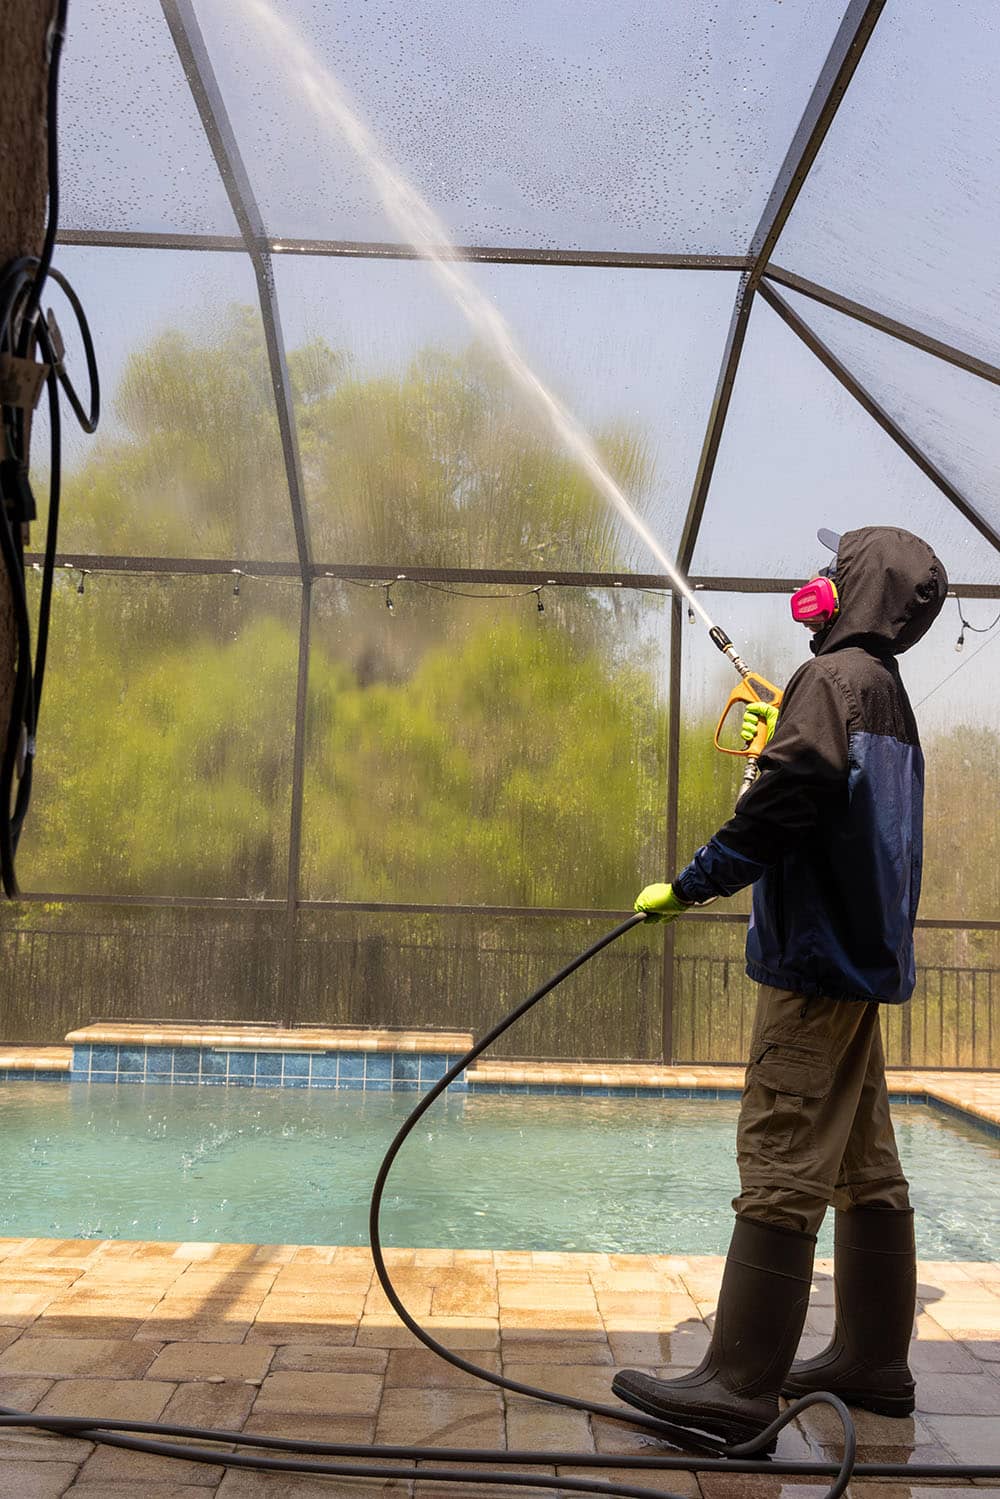 pressure washing professional spraying glass inside pool area